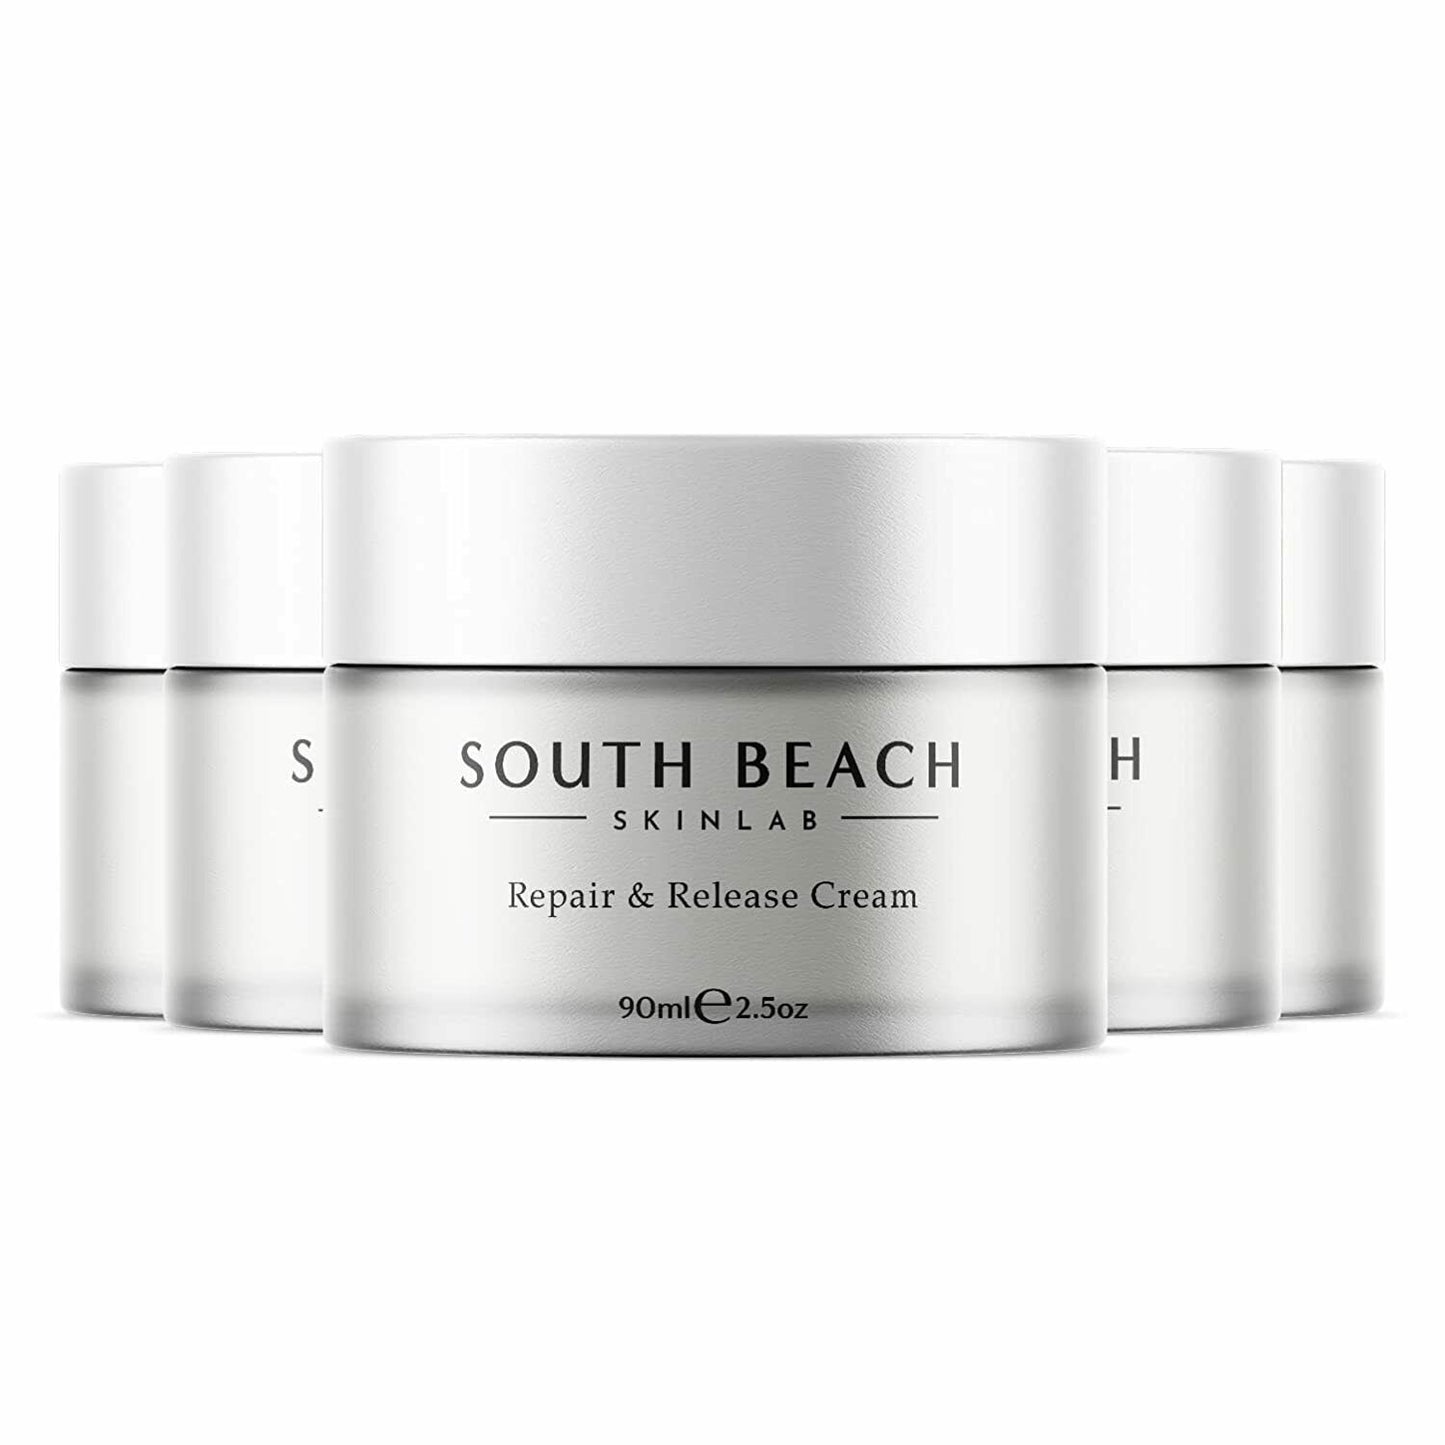 South Beach Skinlab Anti-Aging Cream